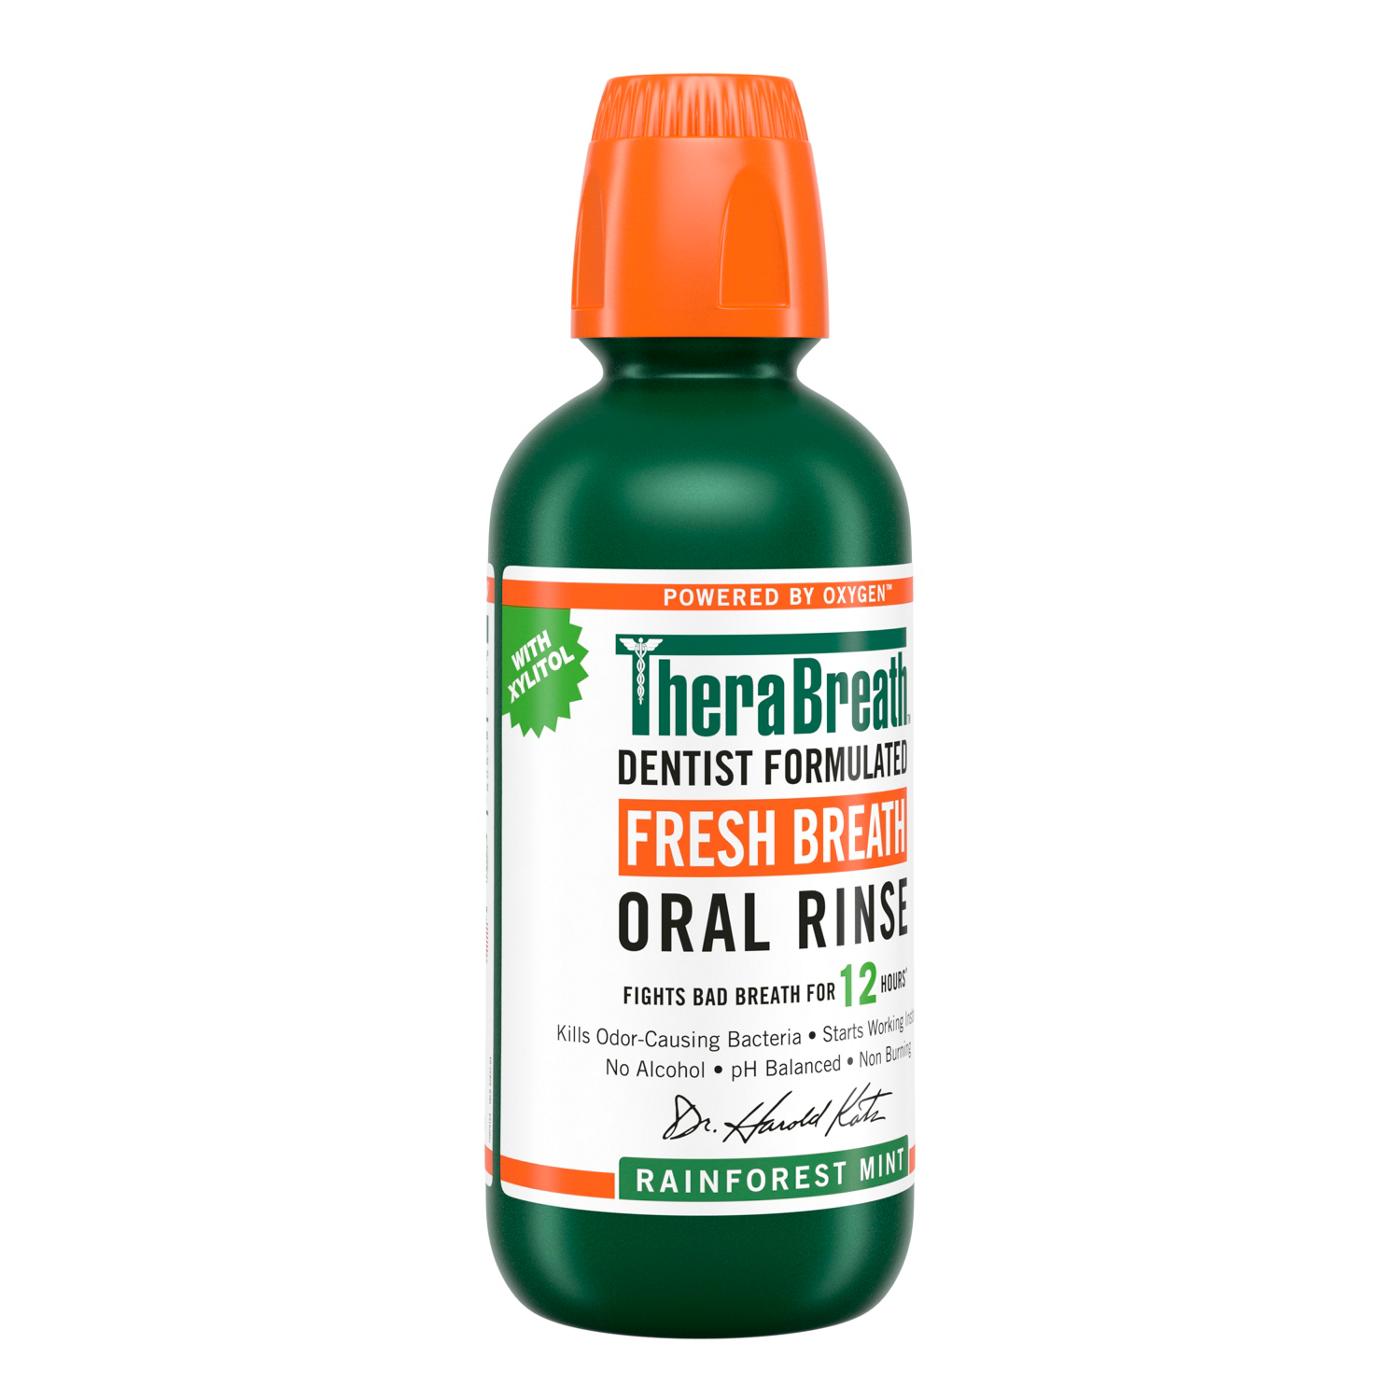 TheraBreath Fresh Breath Oral Rinse Rainforest Mint; image 2 of 6